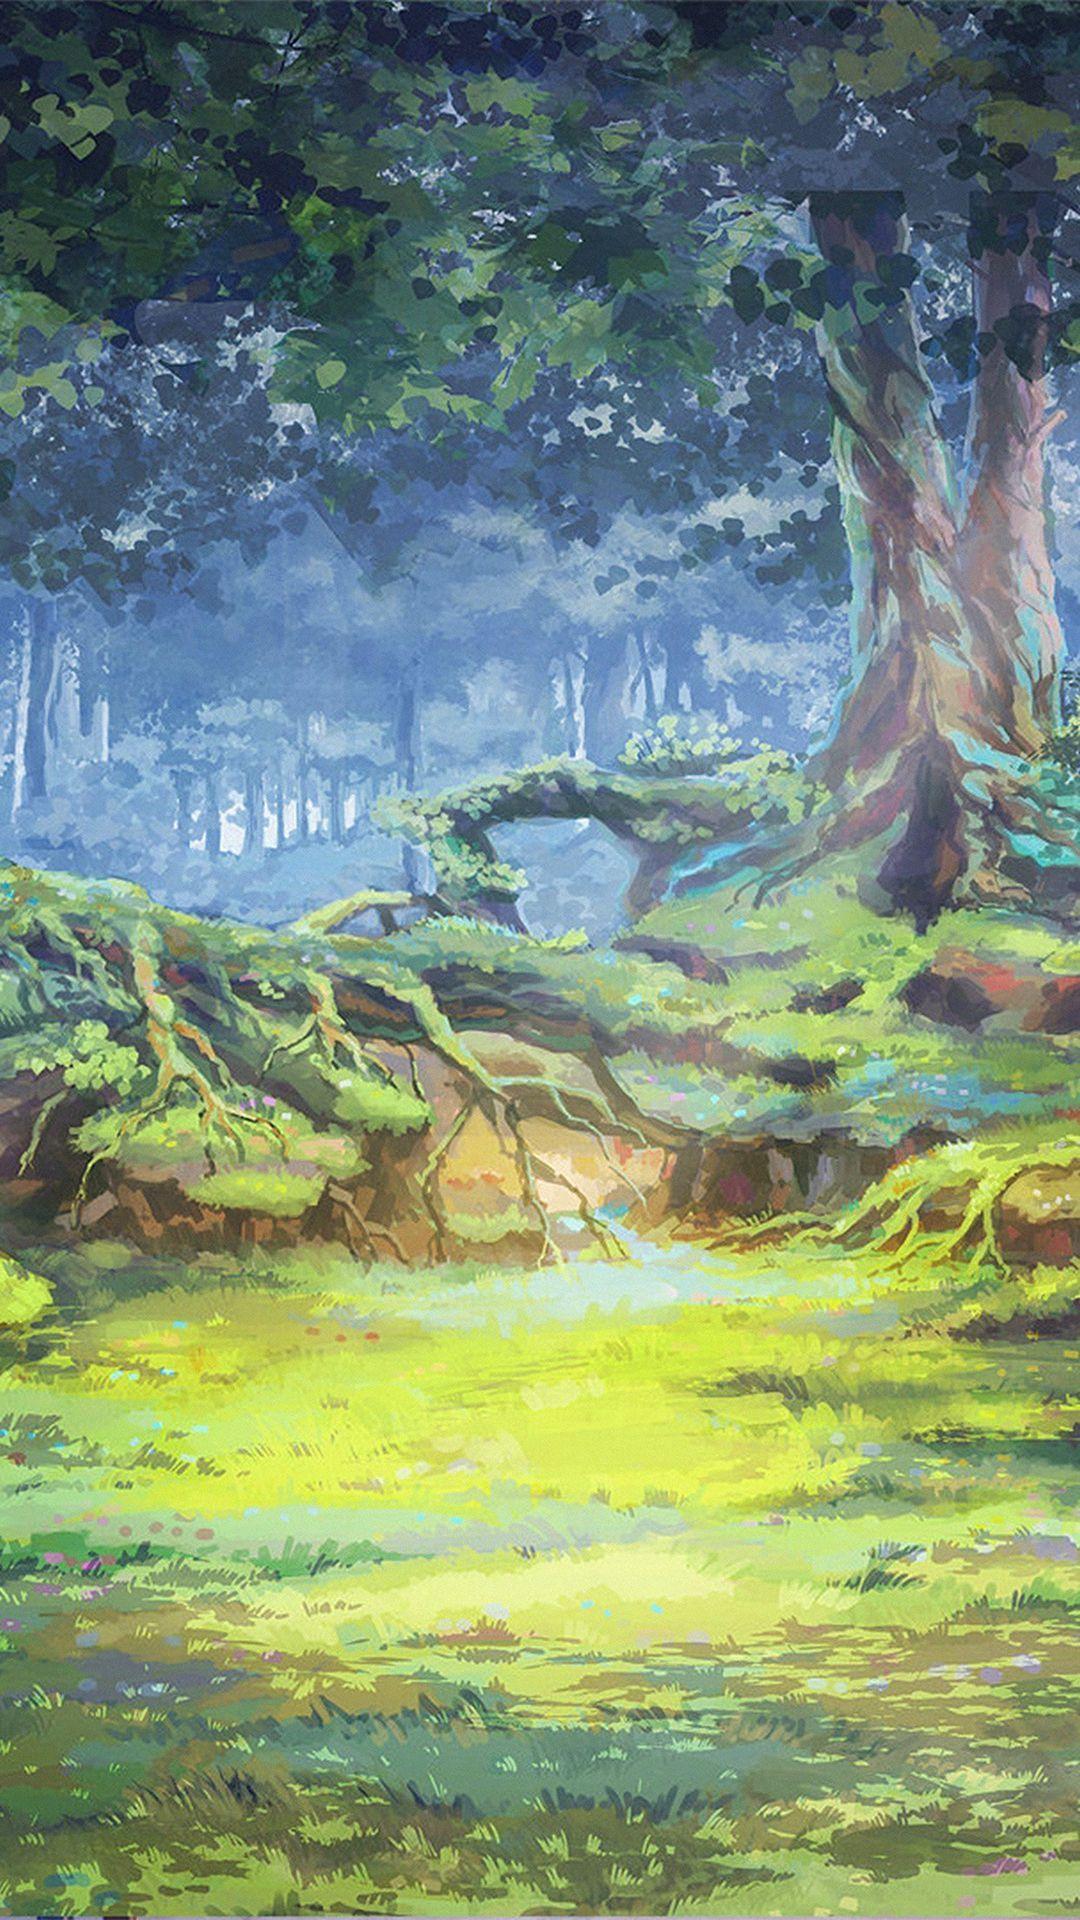 Anime Forest iPhone Wallpapers - Top Những Hình Ảnh Đẹp